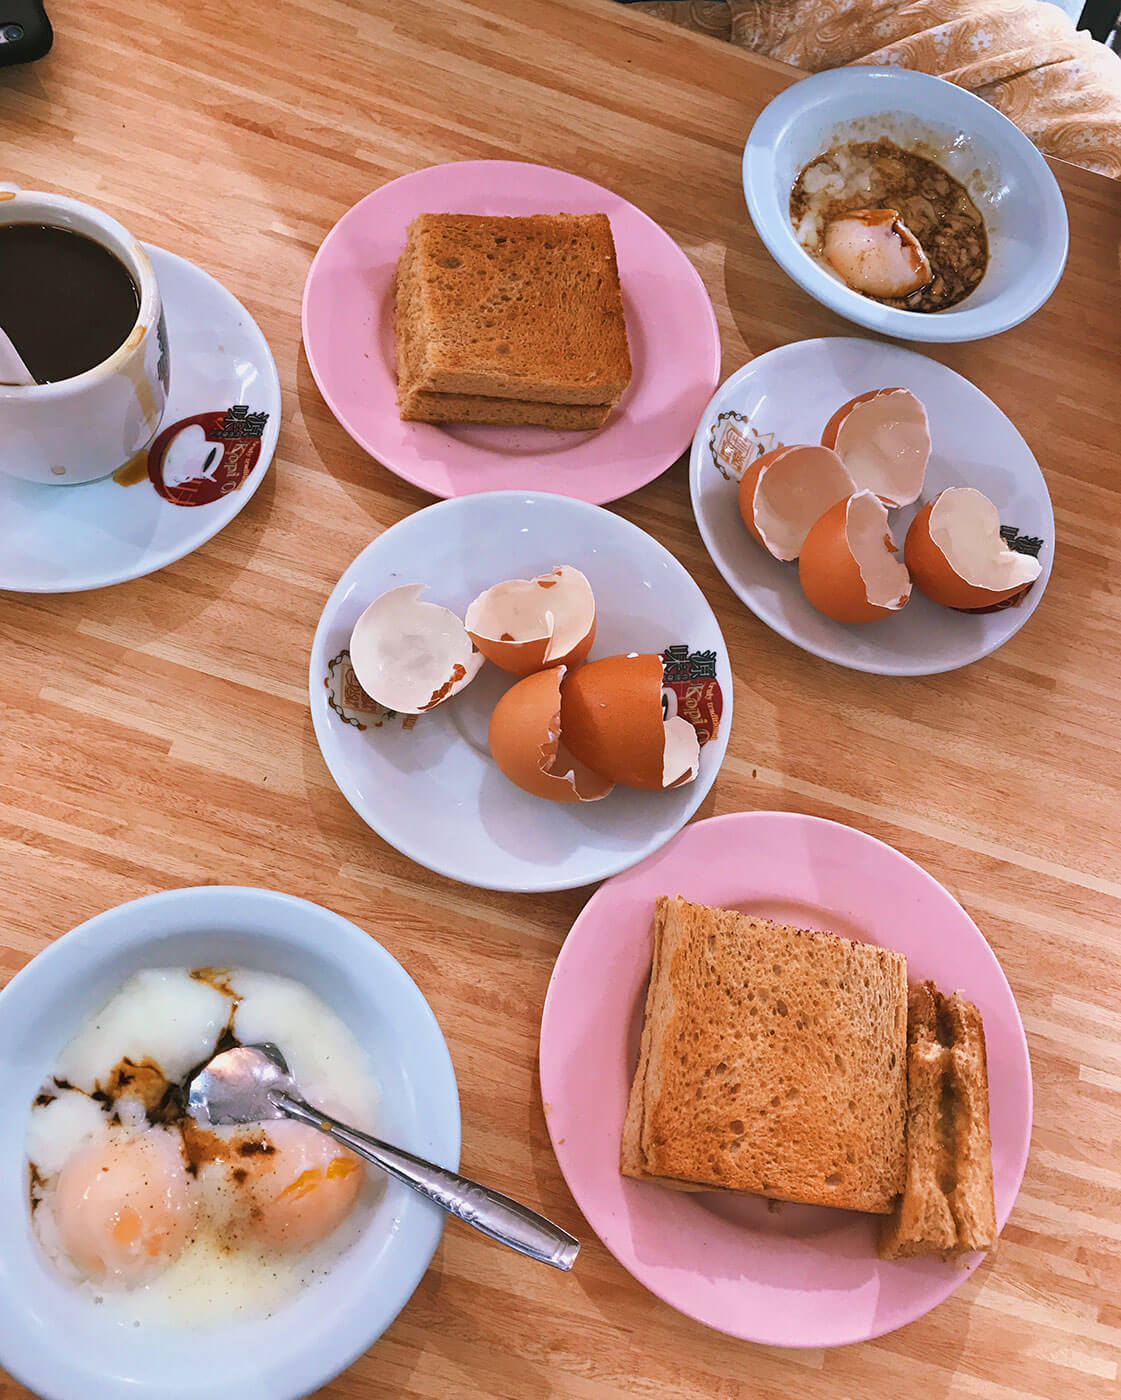 Singaporean Breakfast - Kaya Toast, Soft Boiled Eggs and Kopi